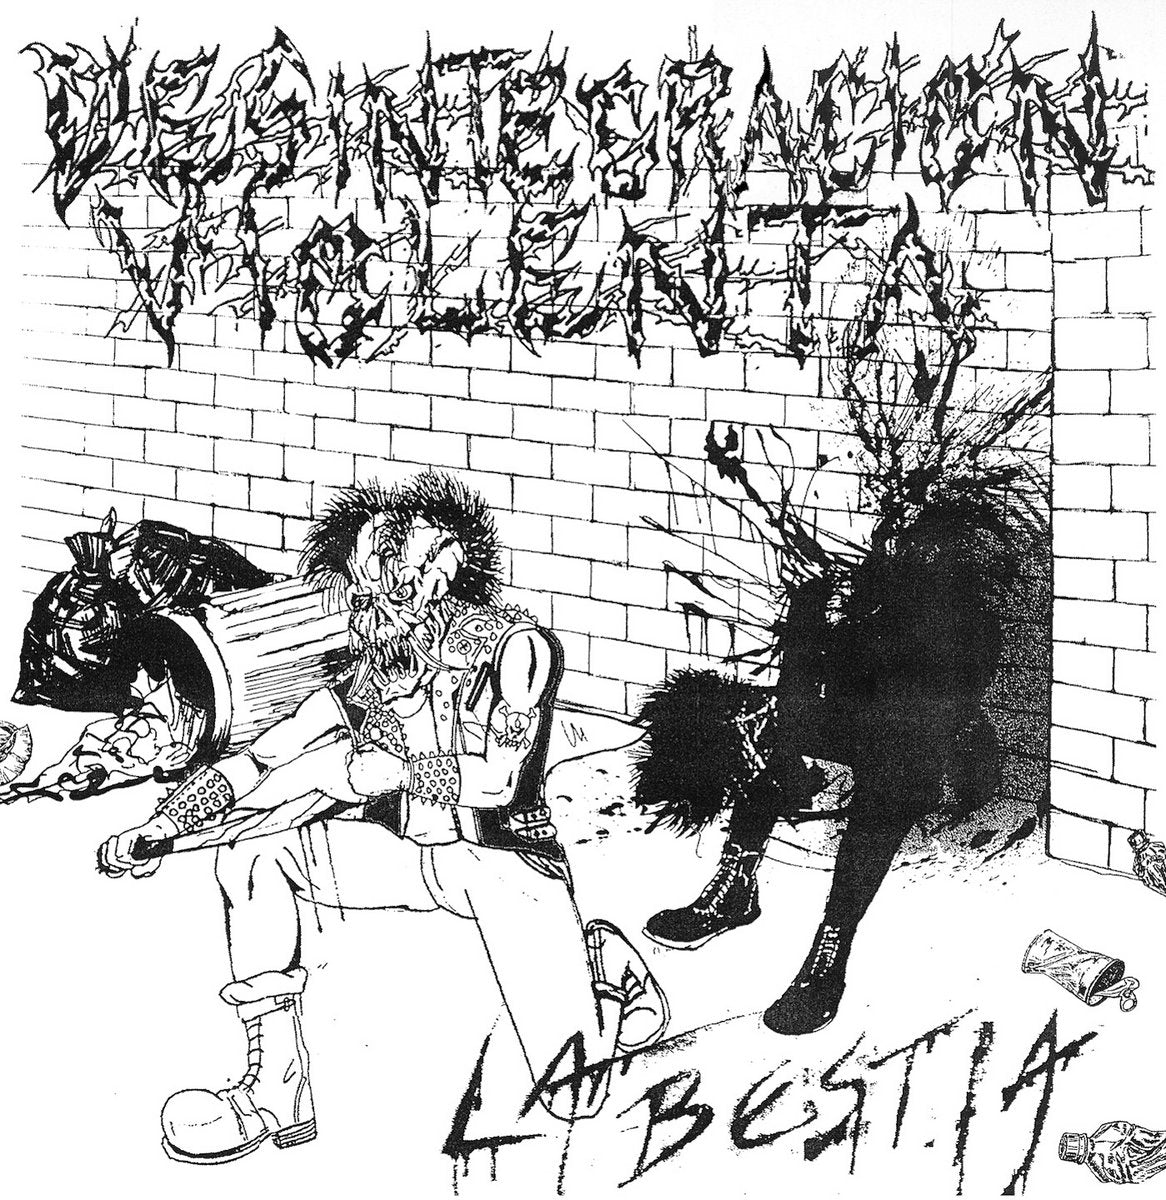 DSEINTEGRACION VIOLENTA - LA BESTIA Vinyl 7"